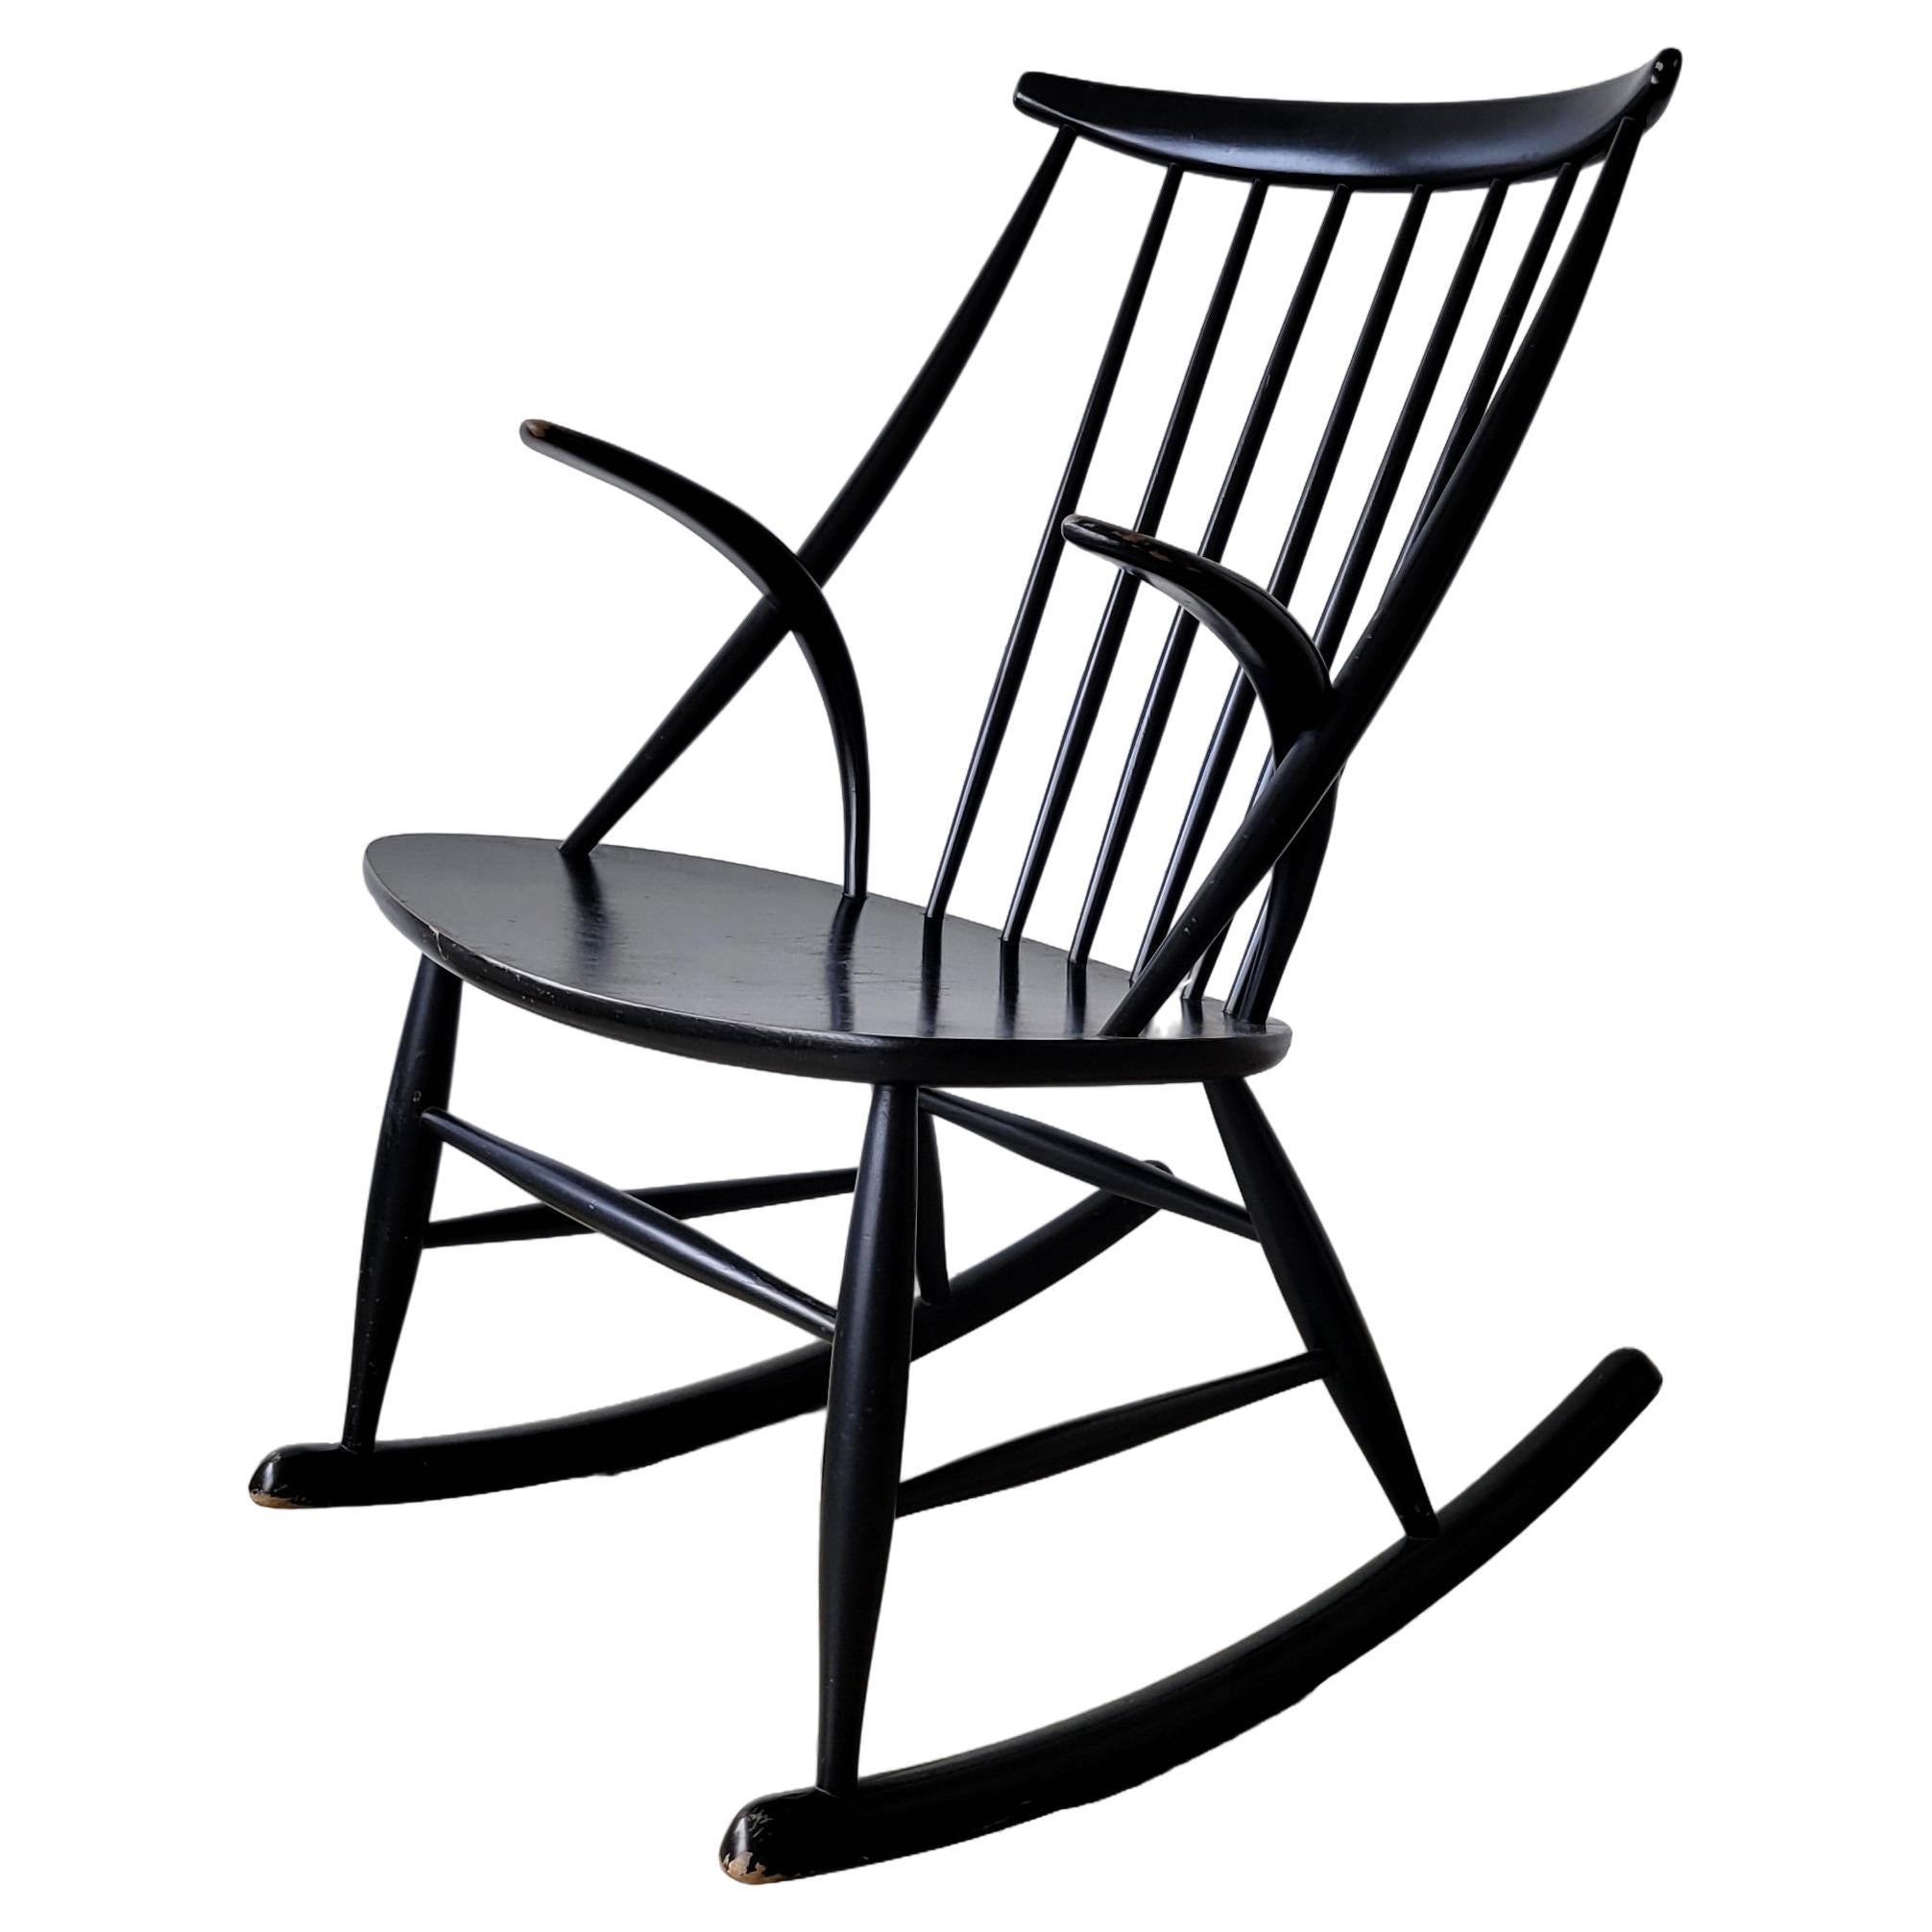 Illum Wikkelsø for Niels Eilersen Black Rocking Chair For Sale